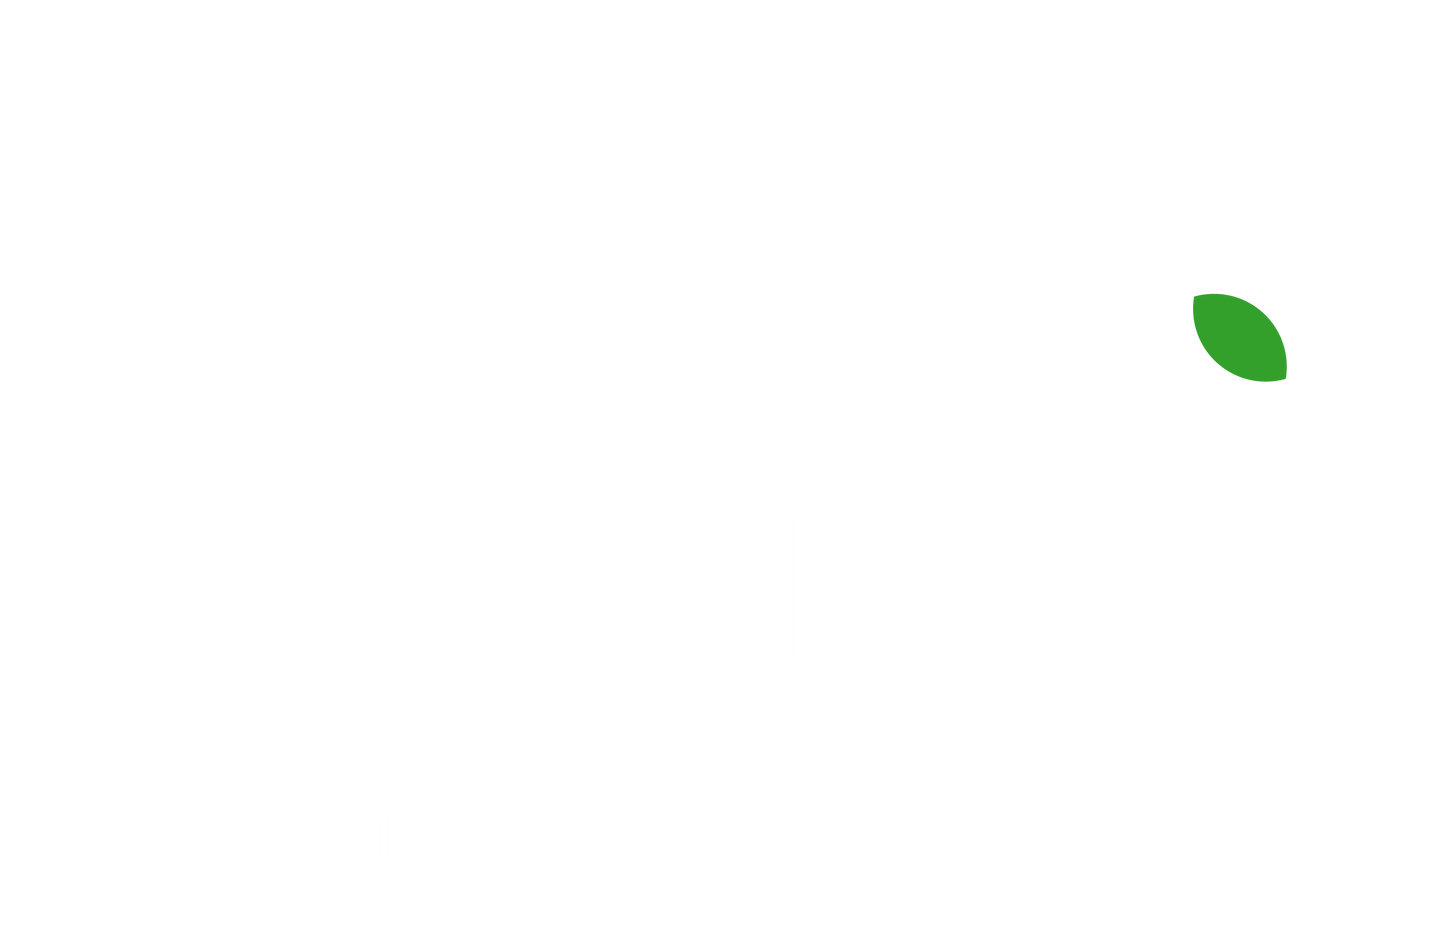 Pure Otago Cherries